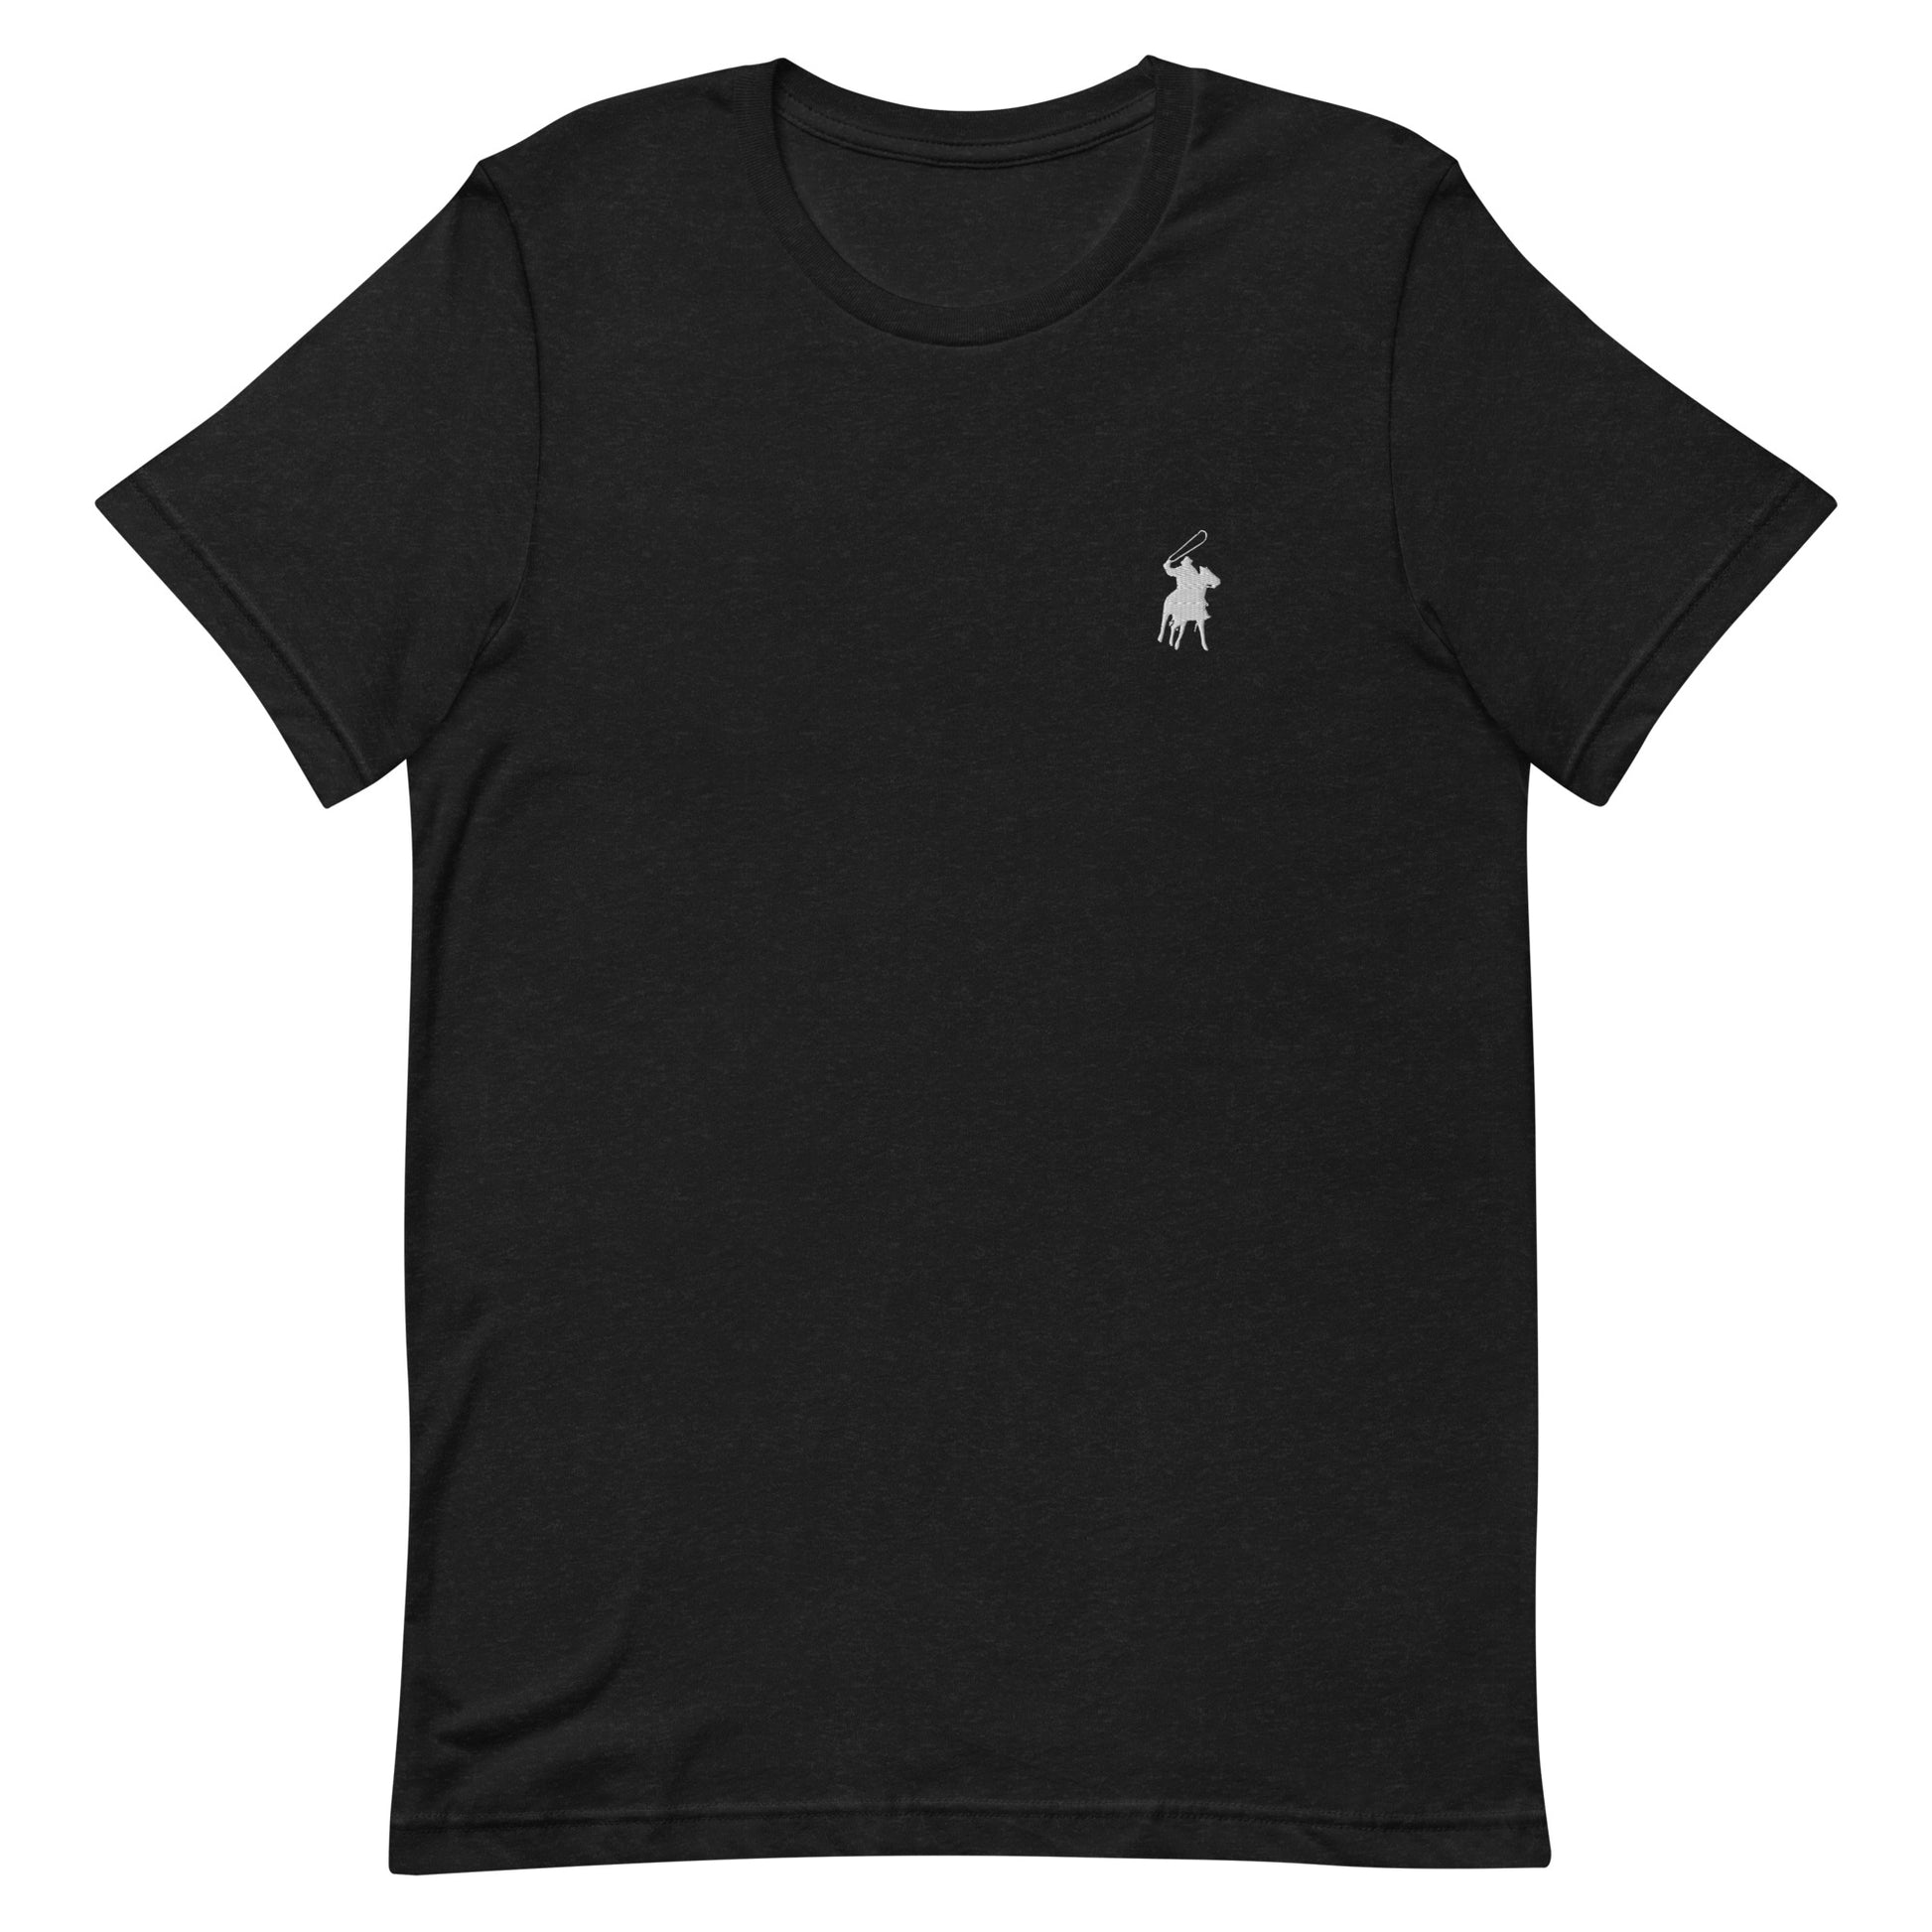 Country Polo Tee (Grey logo on Black Heather T-shirt)